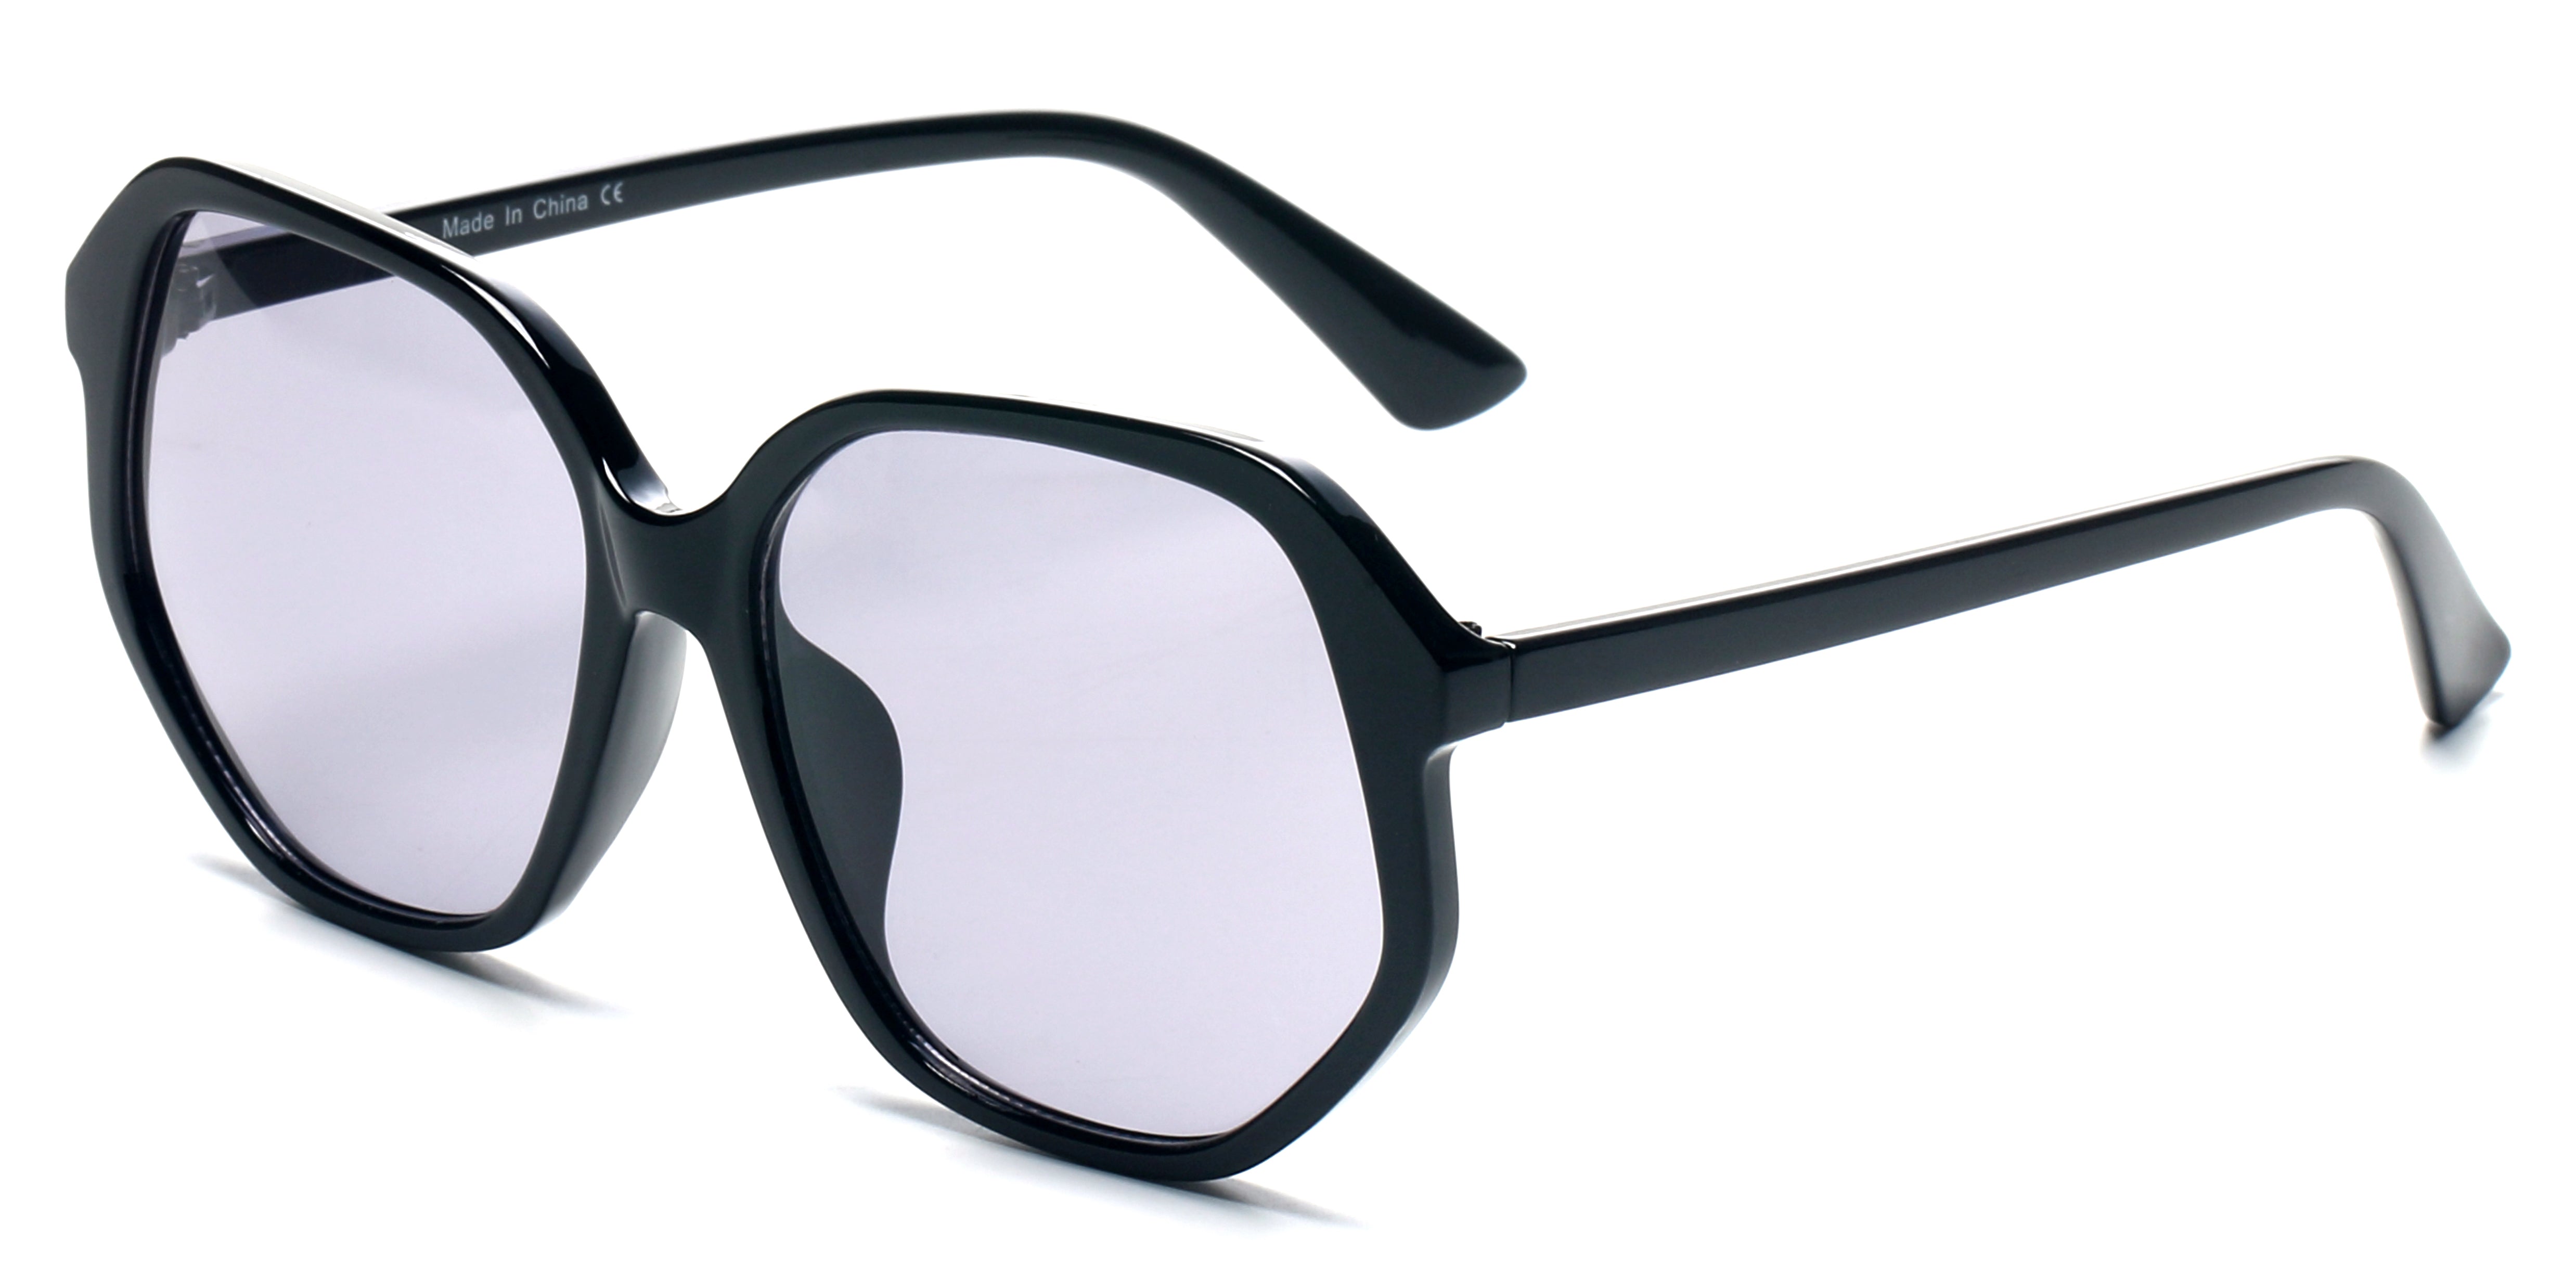 S1108 - Women Geometric Round Oversized Fashion Sunglasses Black